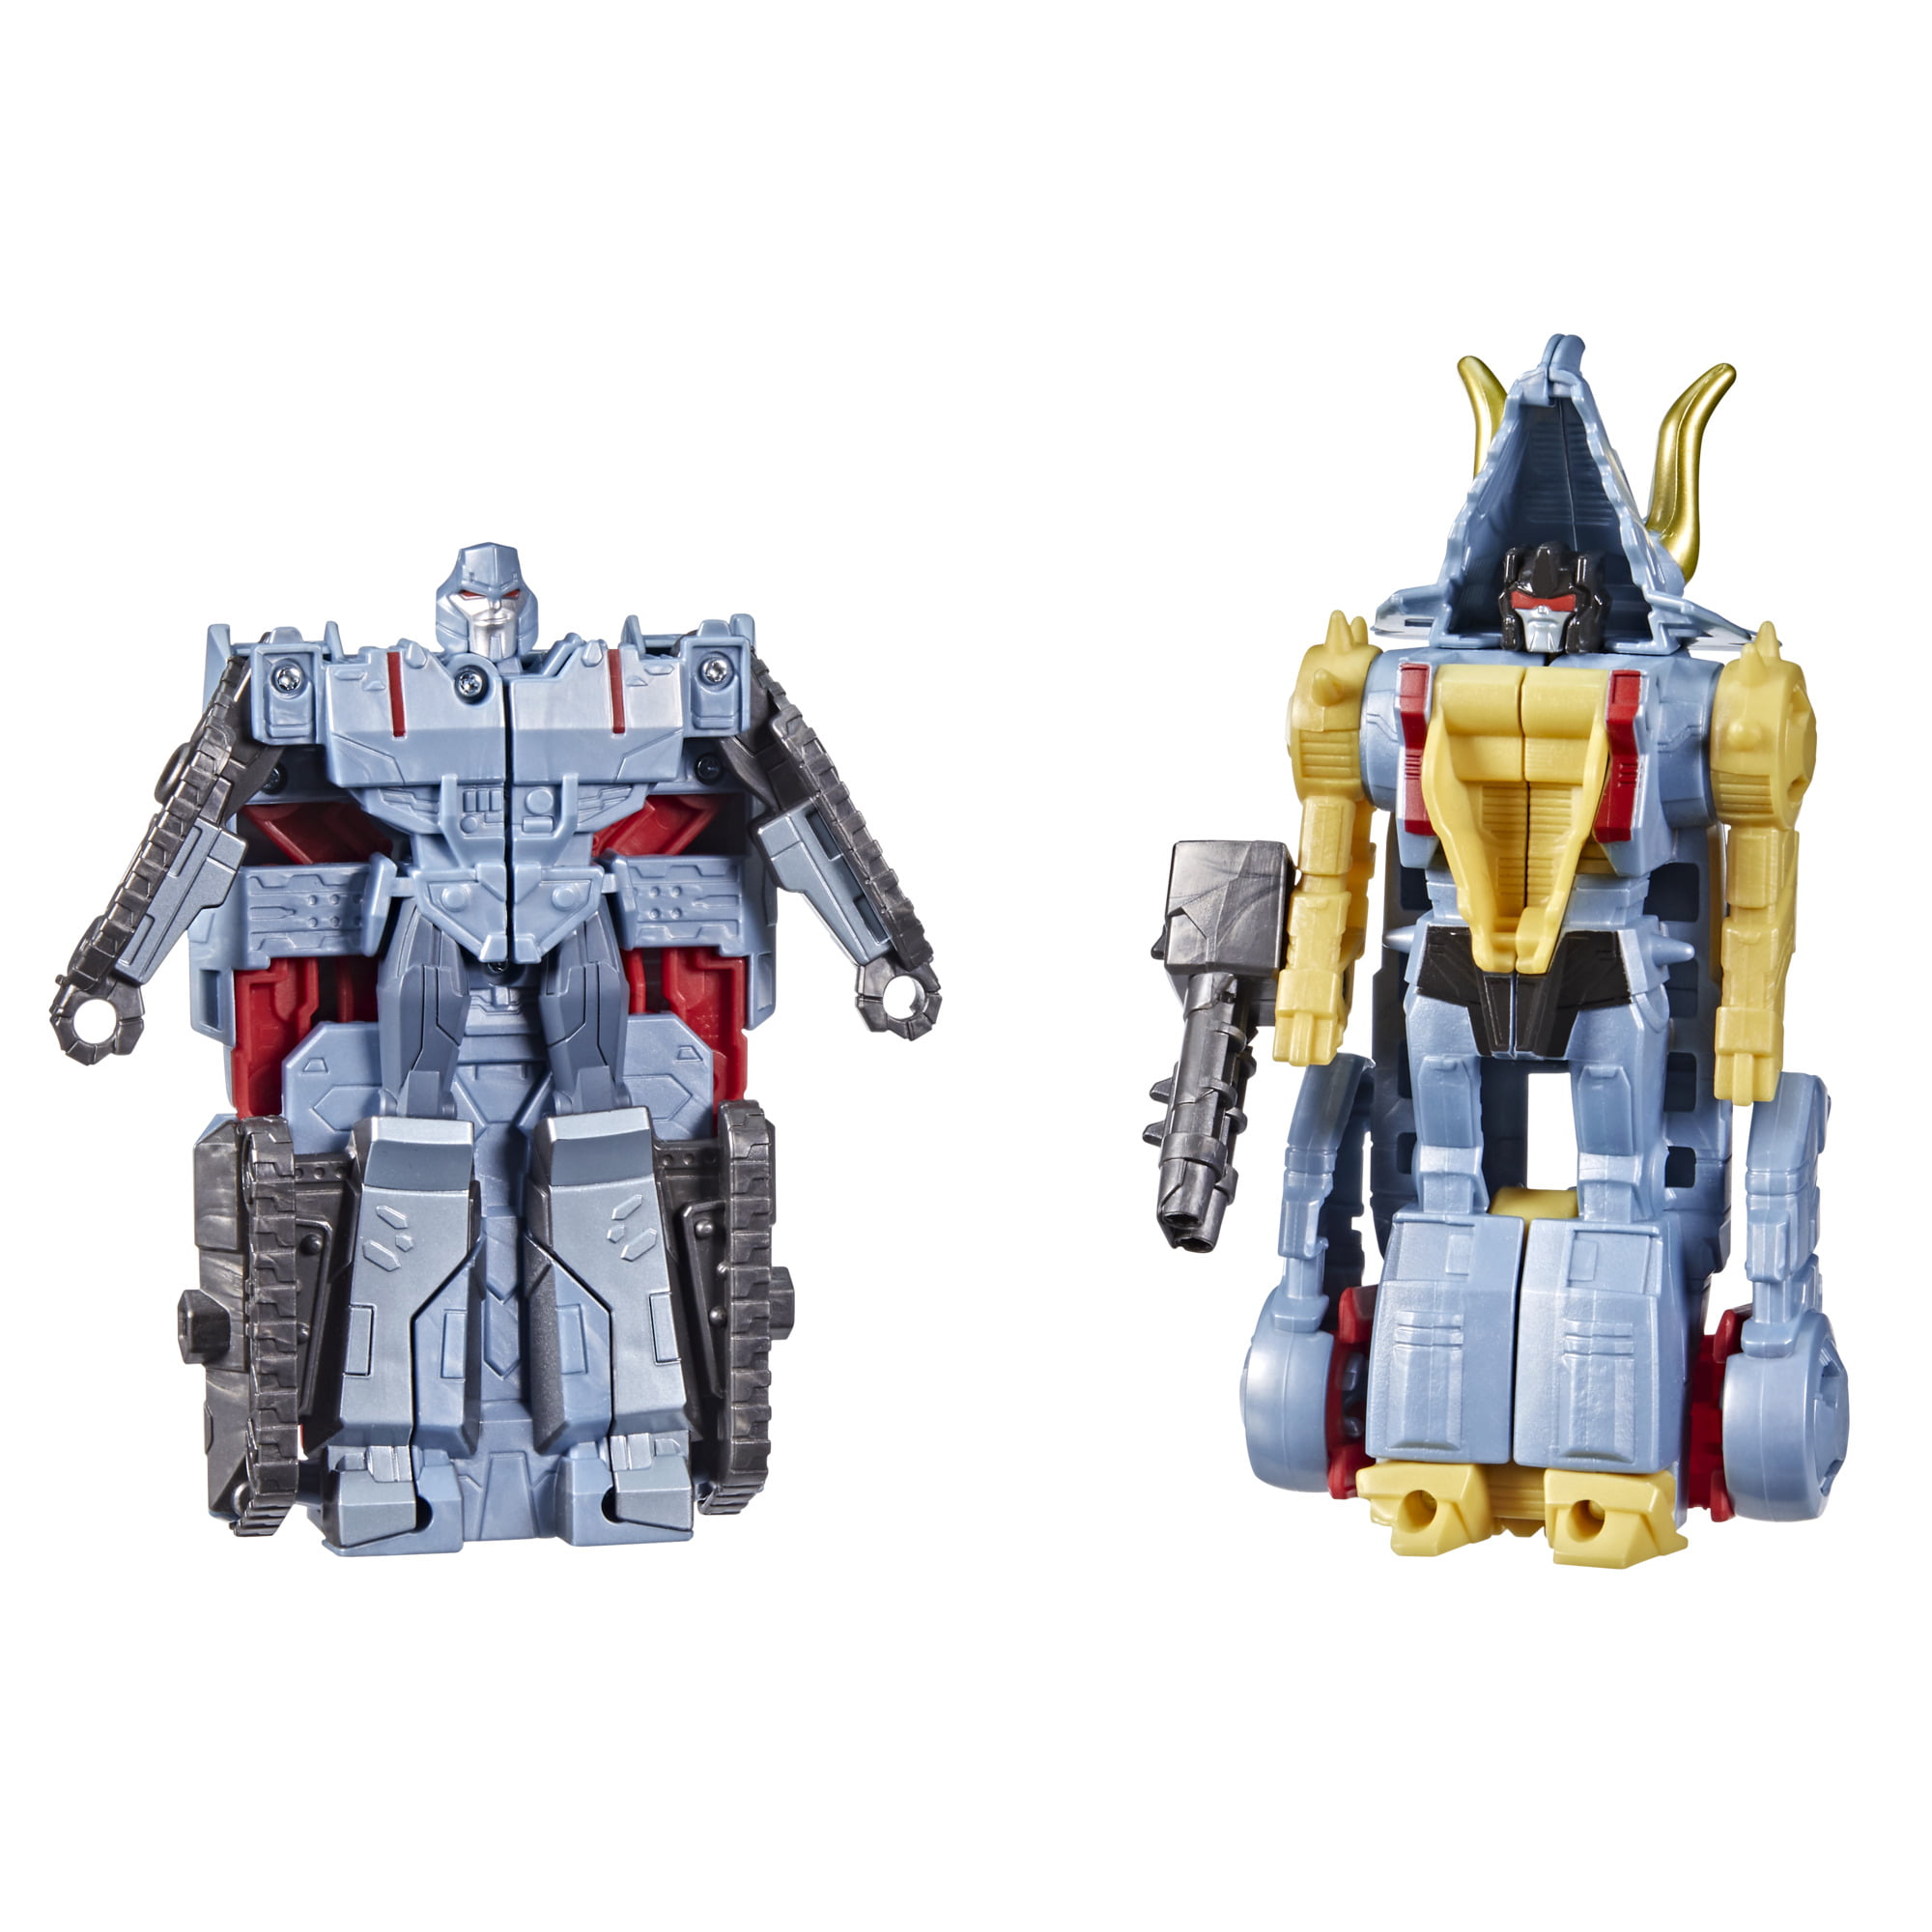 Transformers G1 2.5" Mini Figures Full Set New Boxed Autobot Decepticon Hasbro 